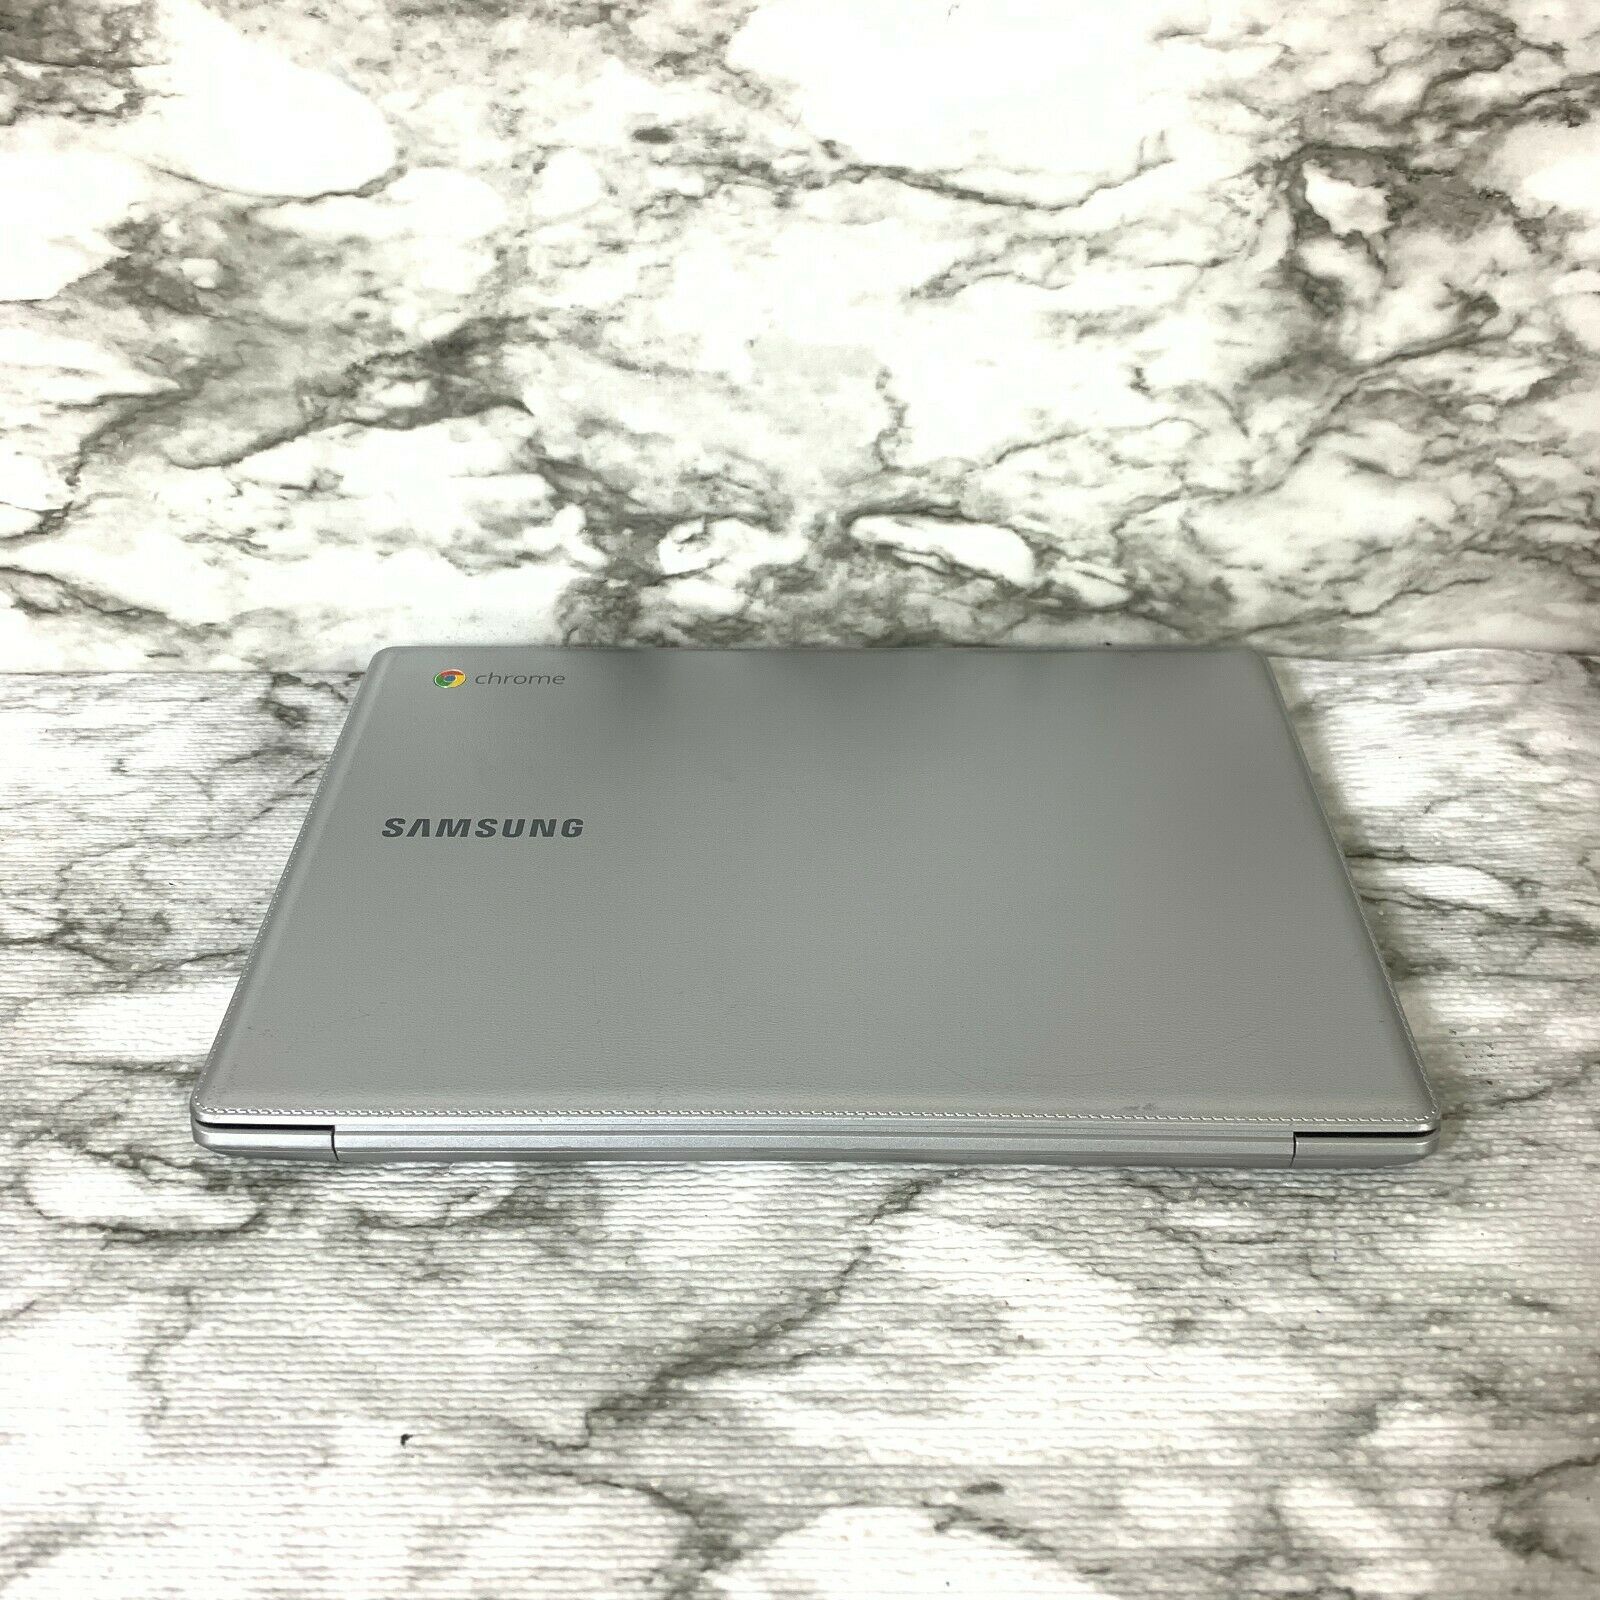 Samsung Chromebook 2 XE500C12 Intel Celeron 2.16GHz 2GB RAM 16GB SSD Laptop